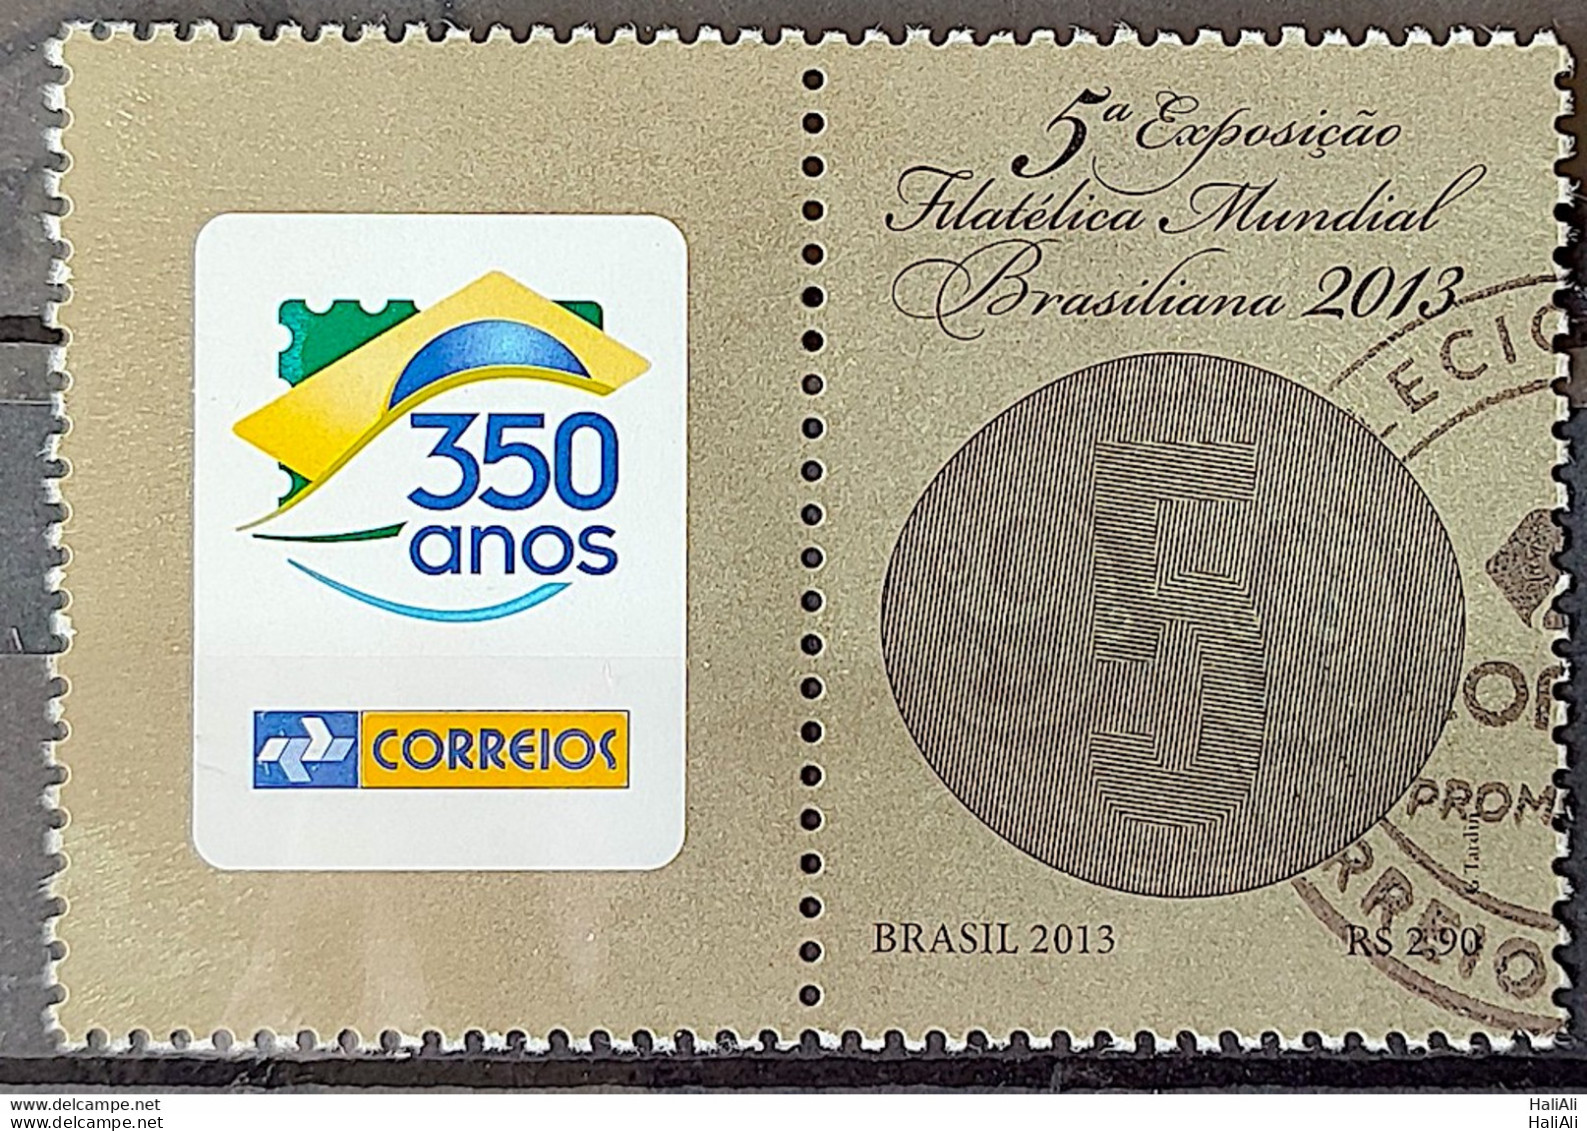 C 3291 Brazil Stamp Exposure Philatelic World Brasiliana Bull Eyes 2013 With Vignette Circulated 1 - Used Stamps